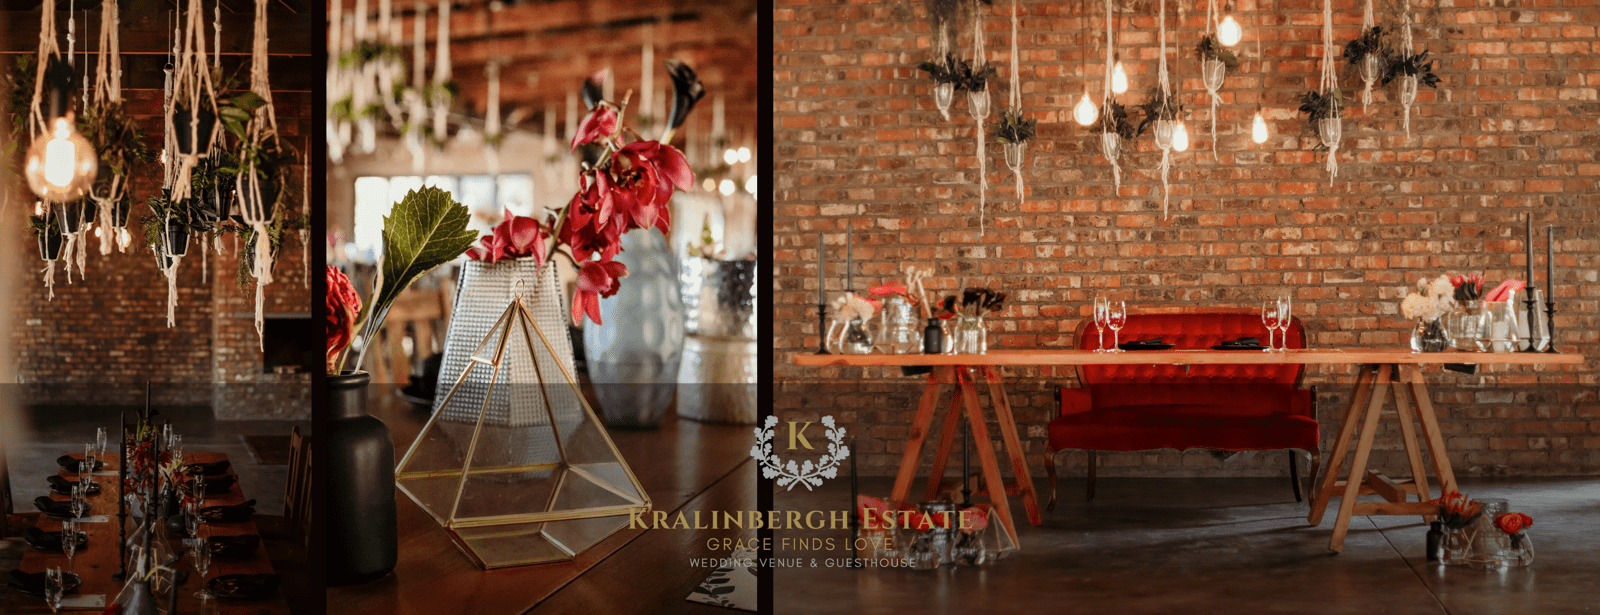 Decorated Wedding Venue – Kralinbergh Estate